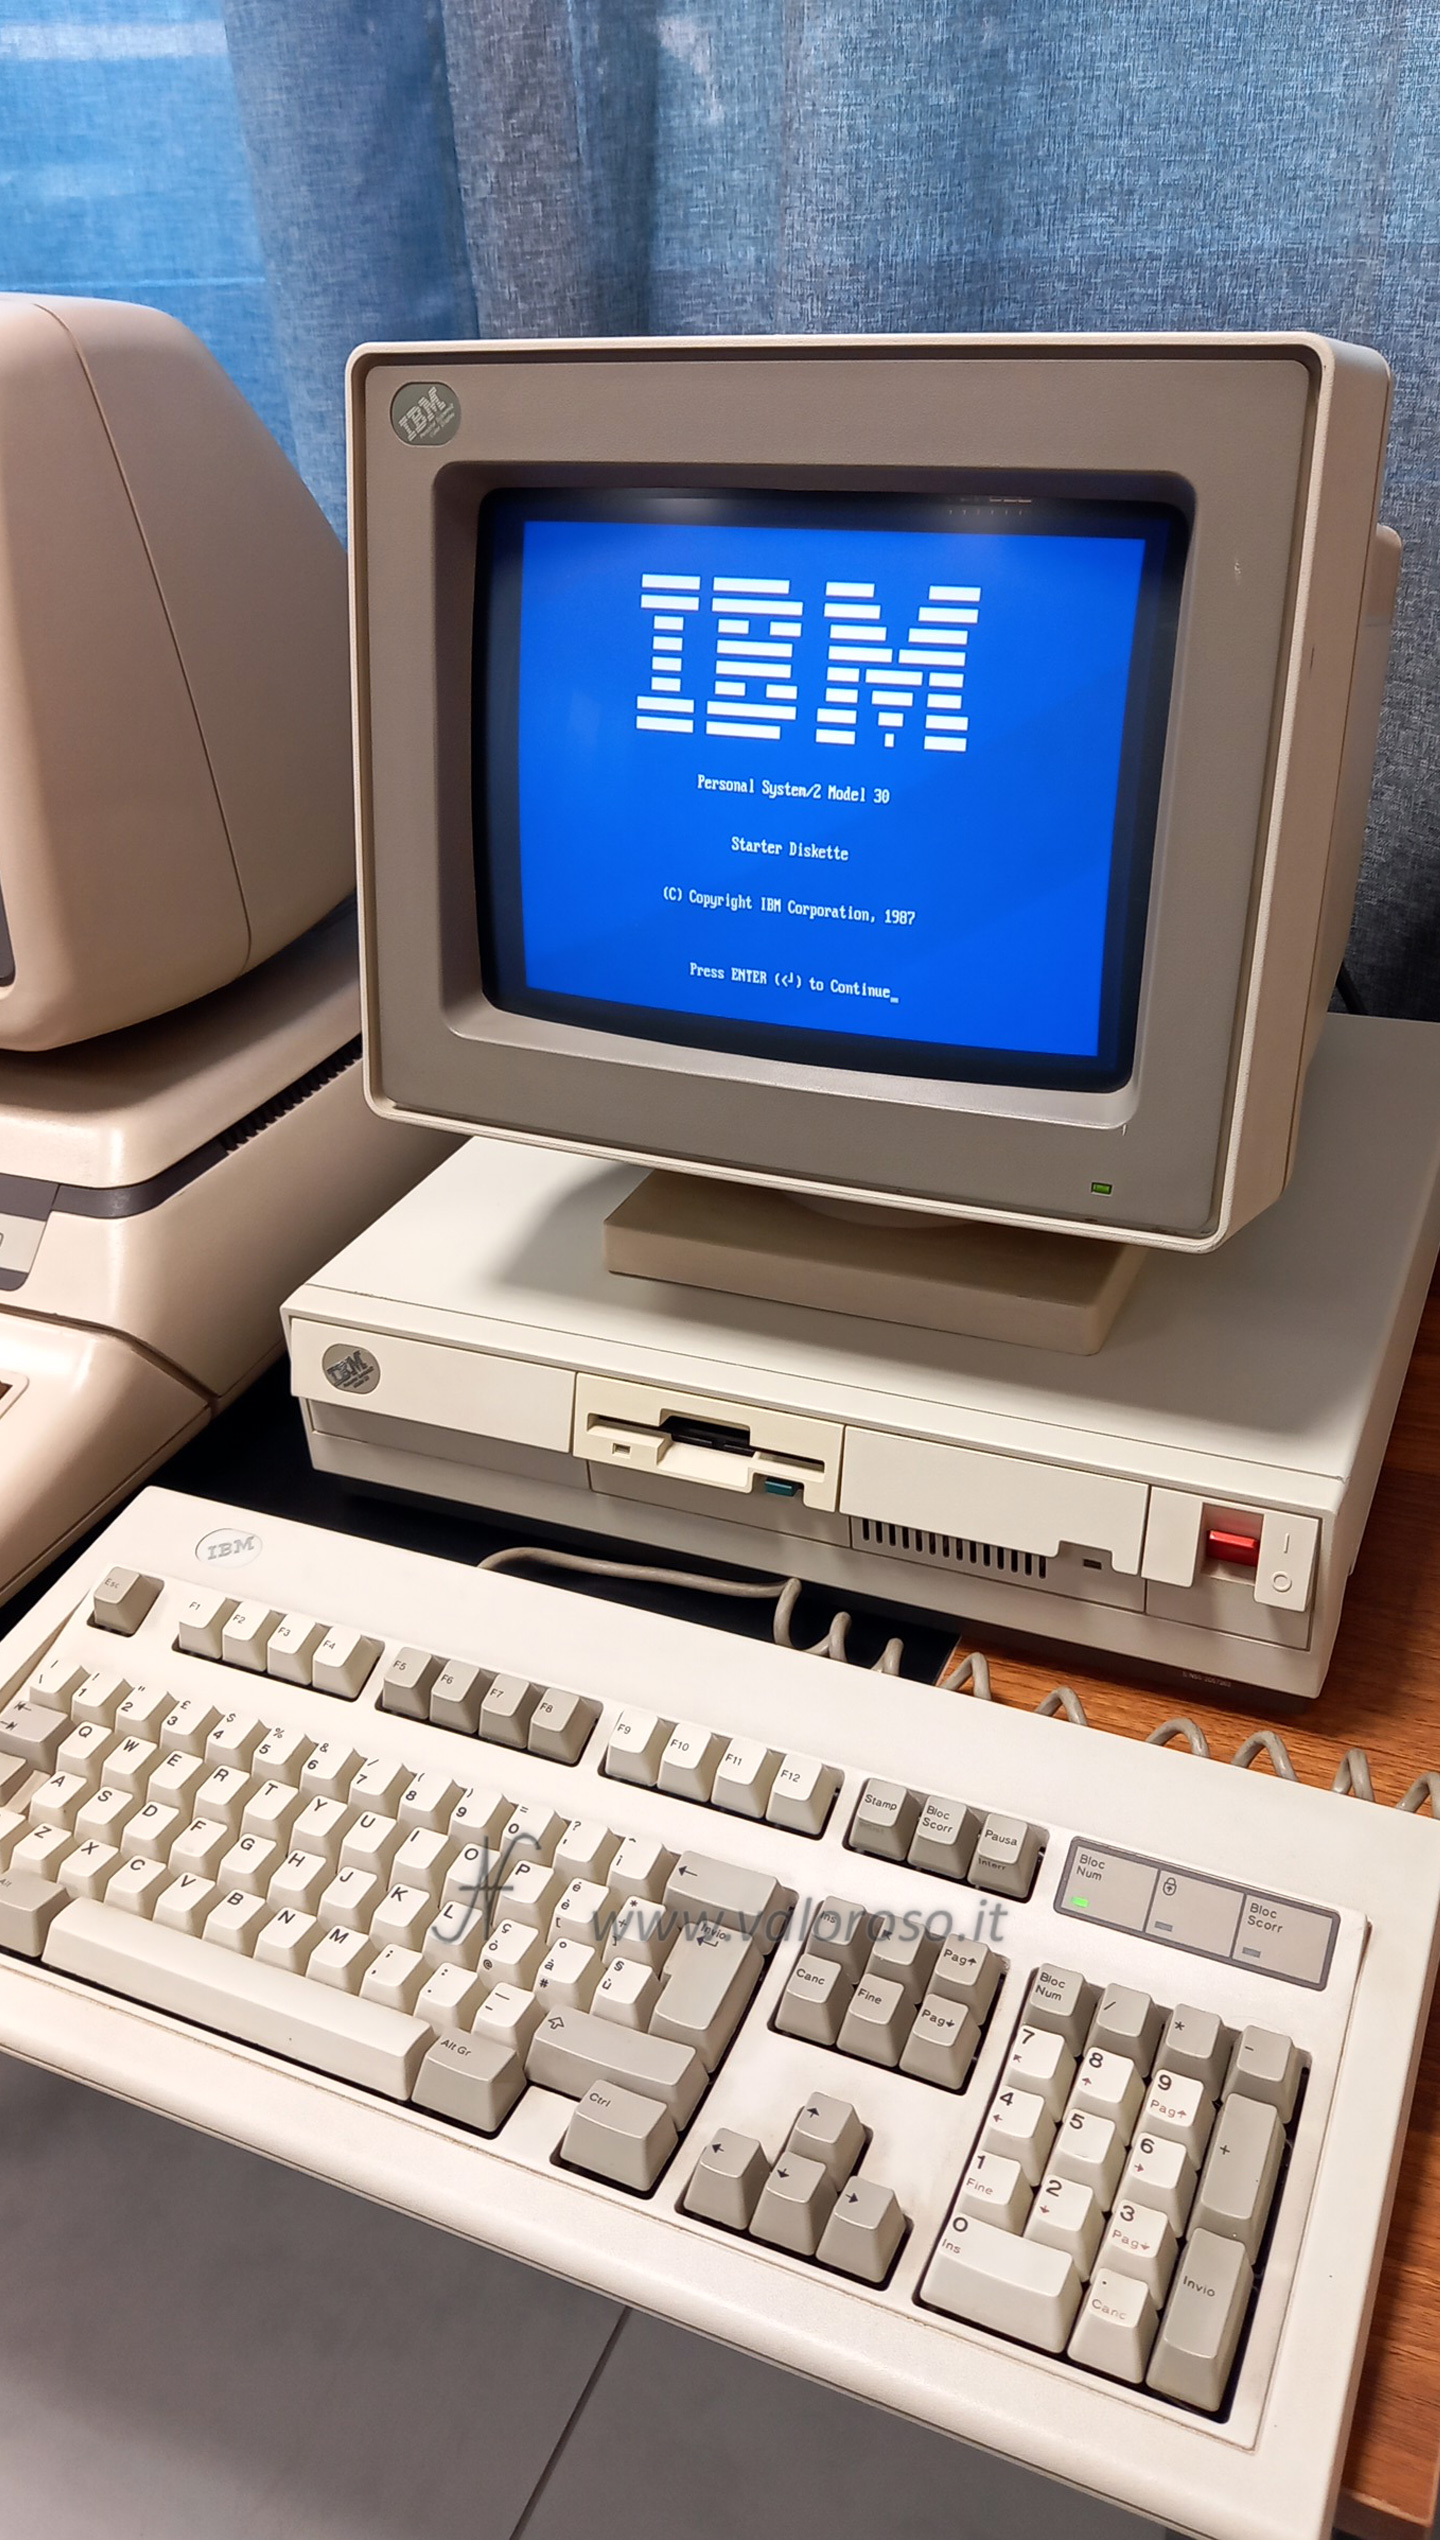 IBM PS2 model 30, Intel 8086, mechanical keyboard, VGA CRT monitor, acceso, International Business Machines, computer anni 80